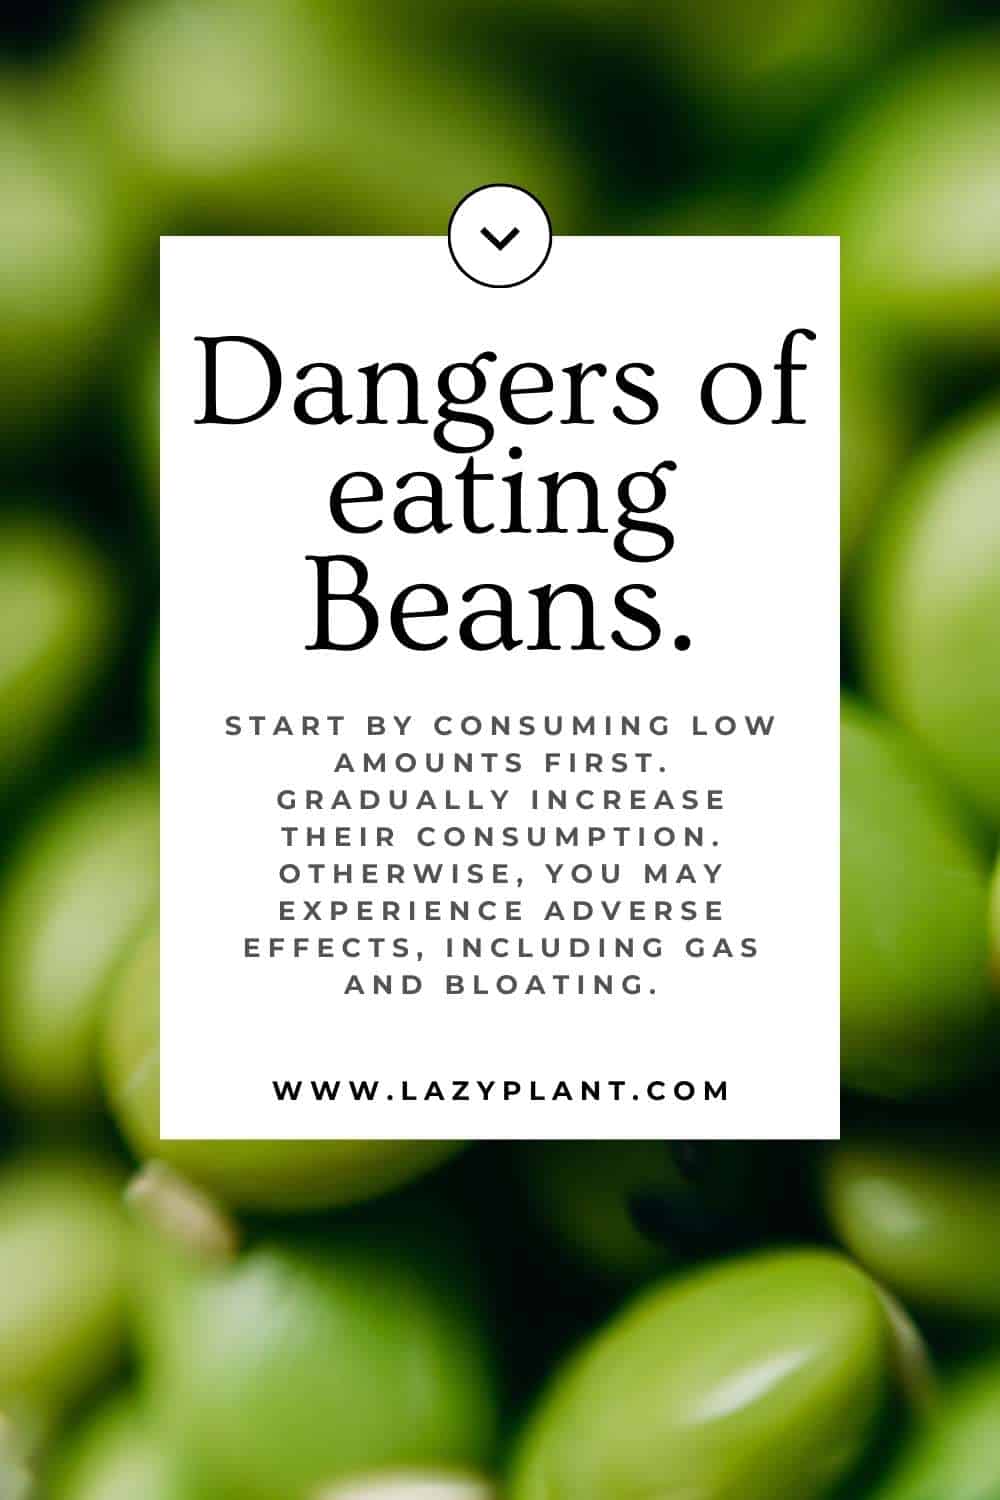 Dangers of eating Beans.